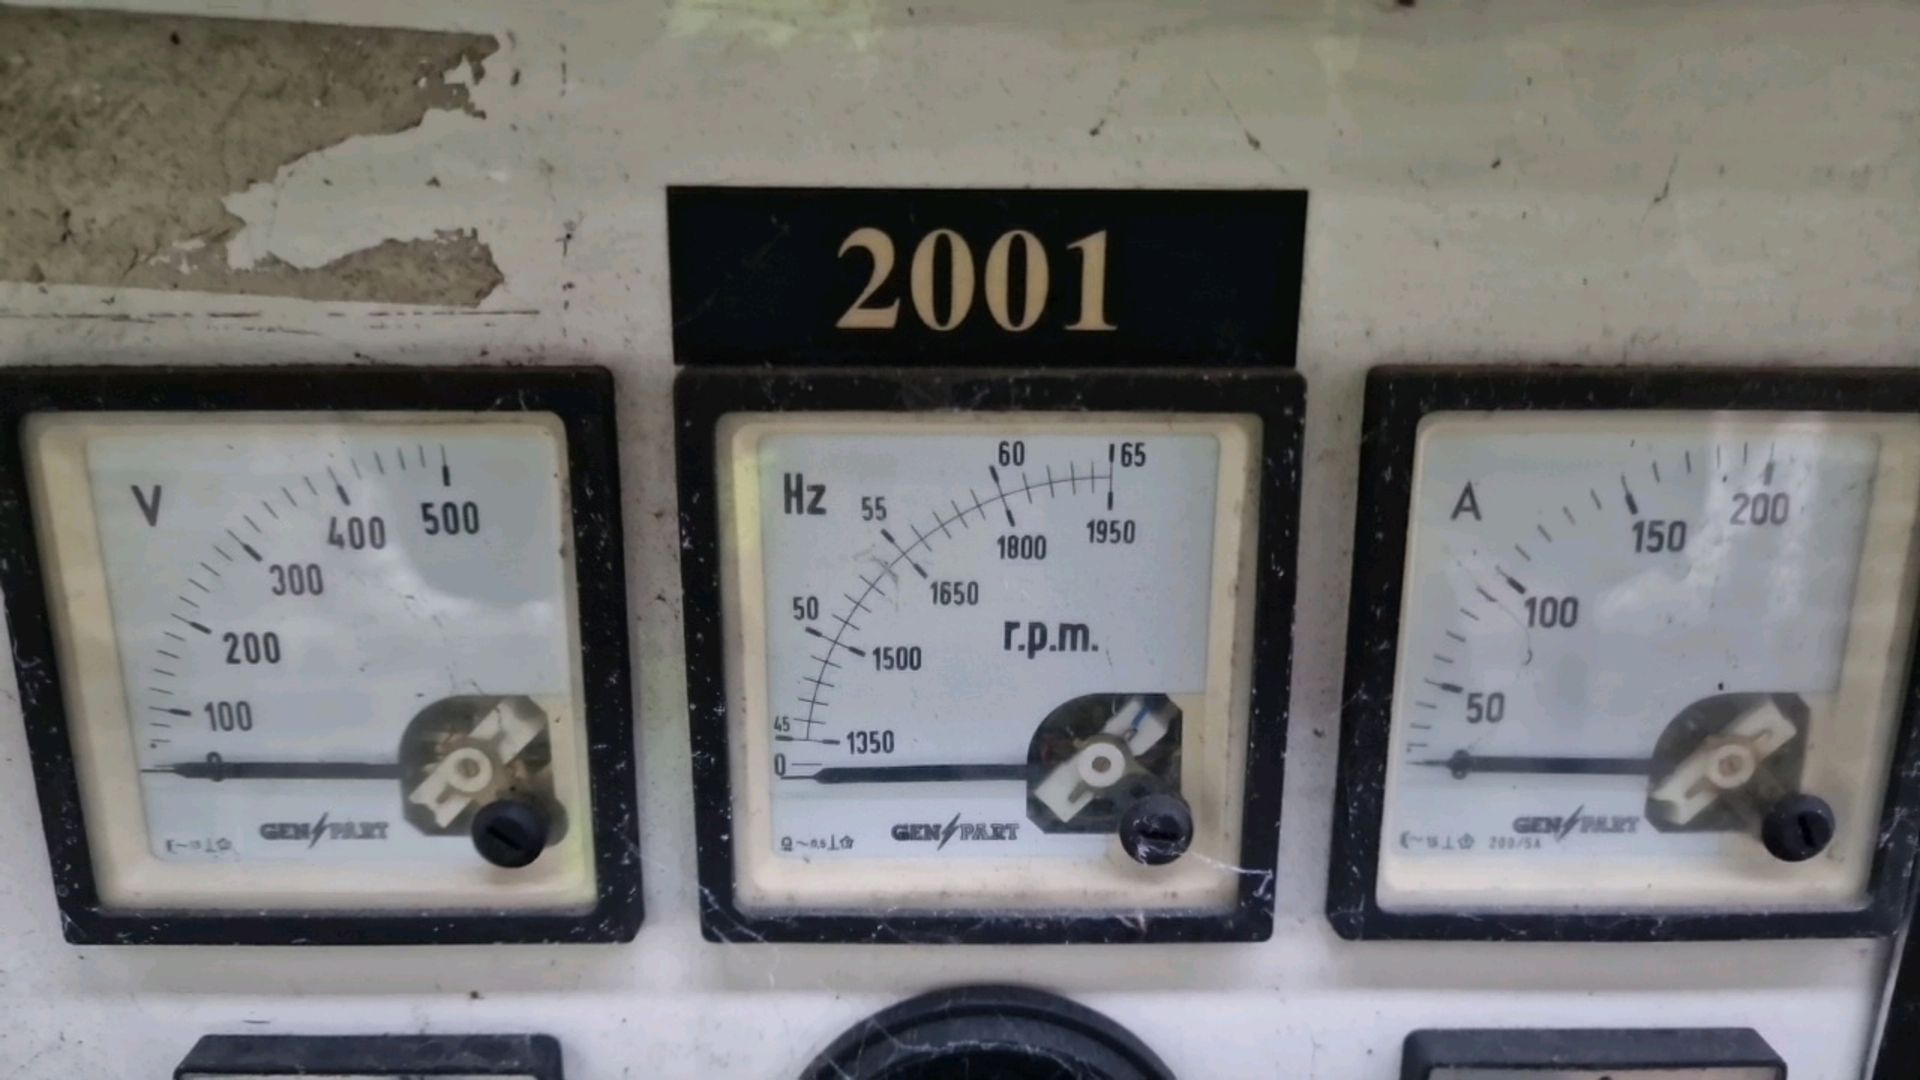 2001 Generator - Image 10 of 14